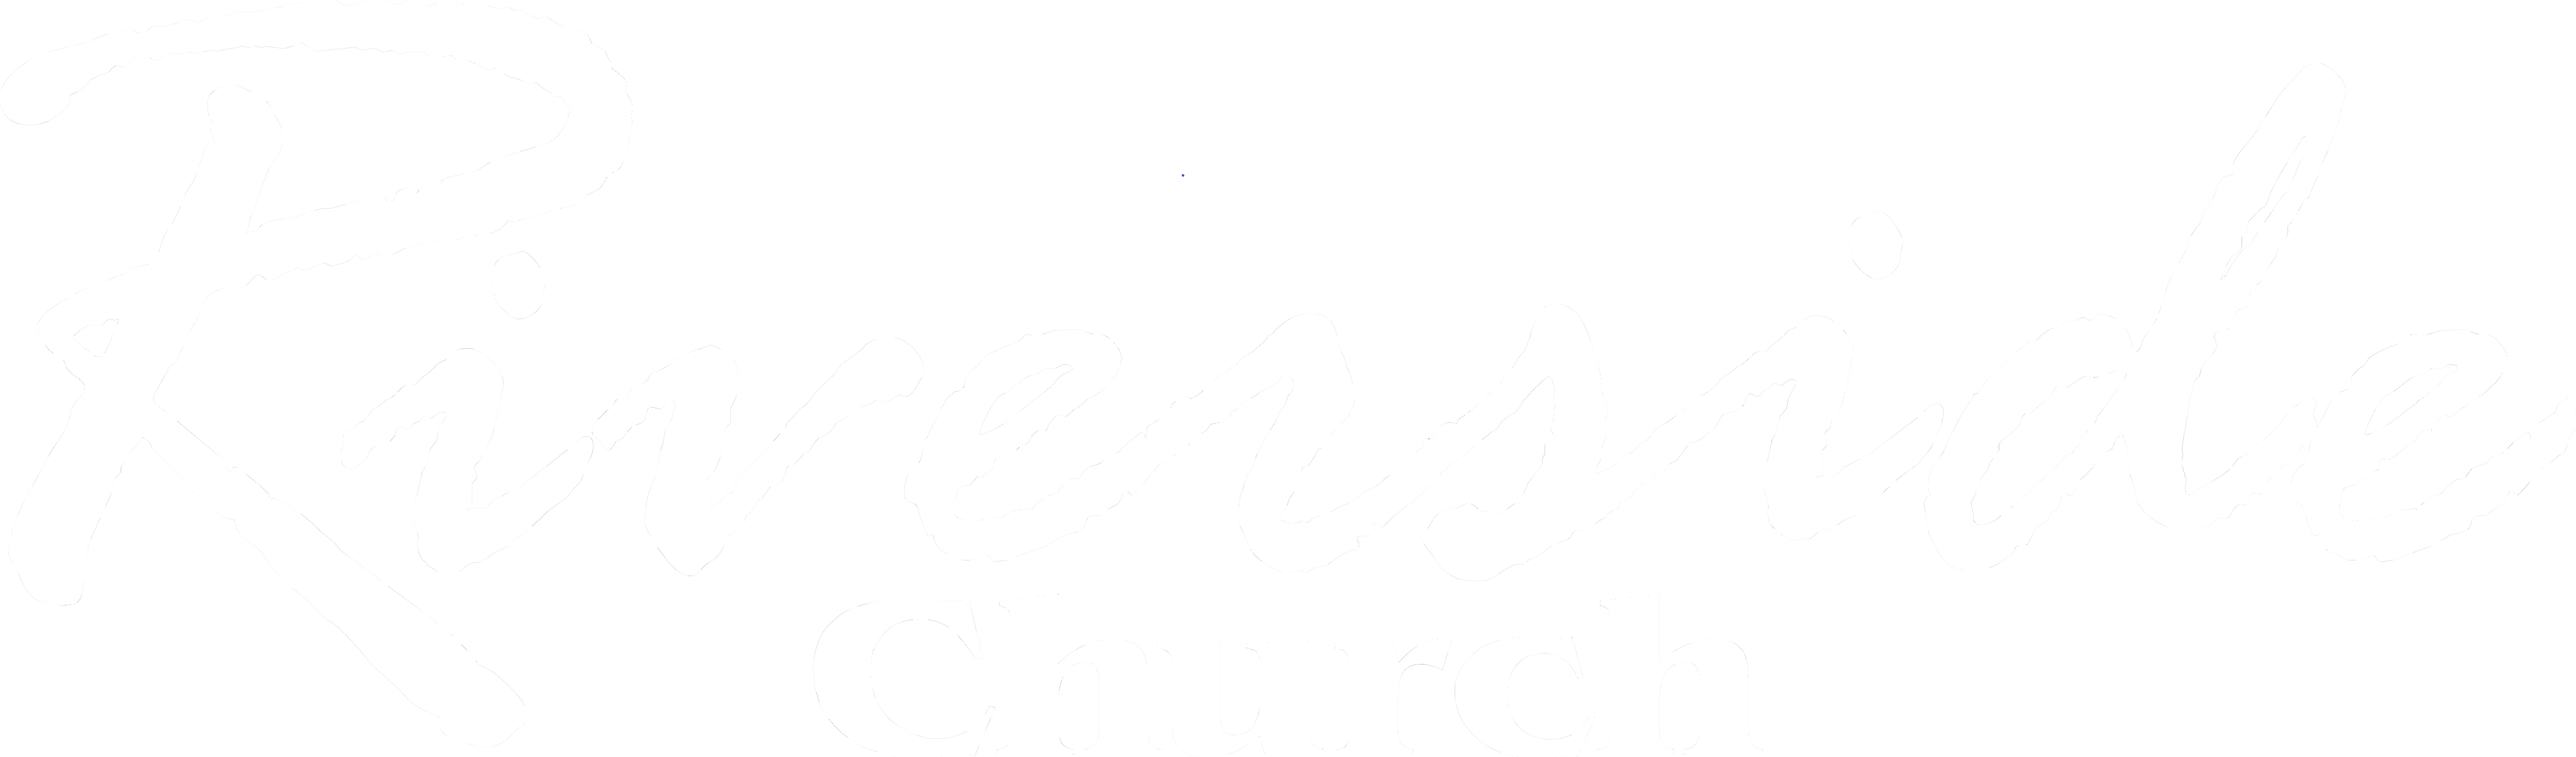 Riverside Church logo